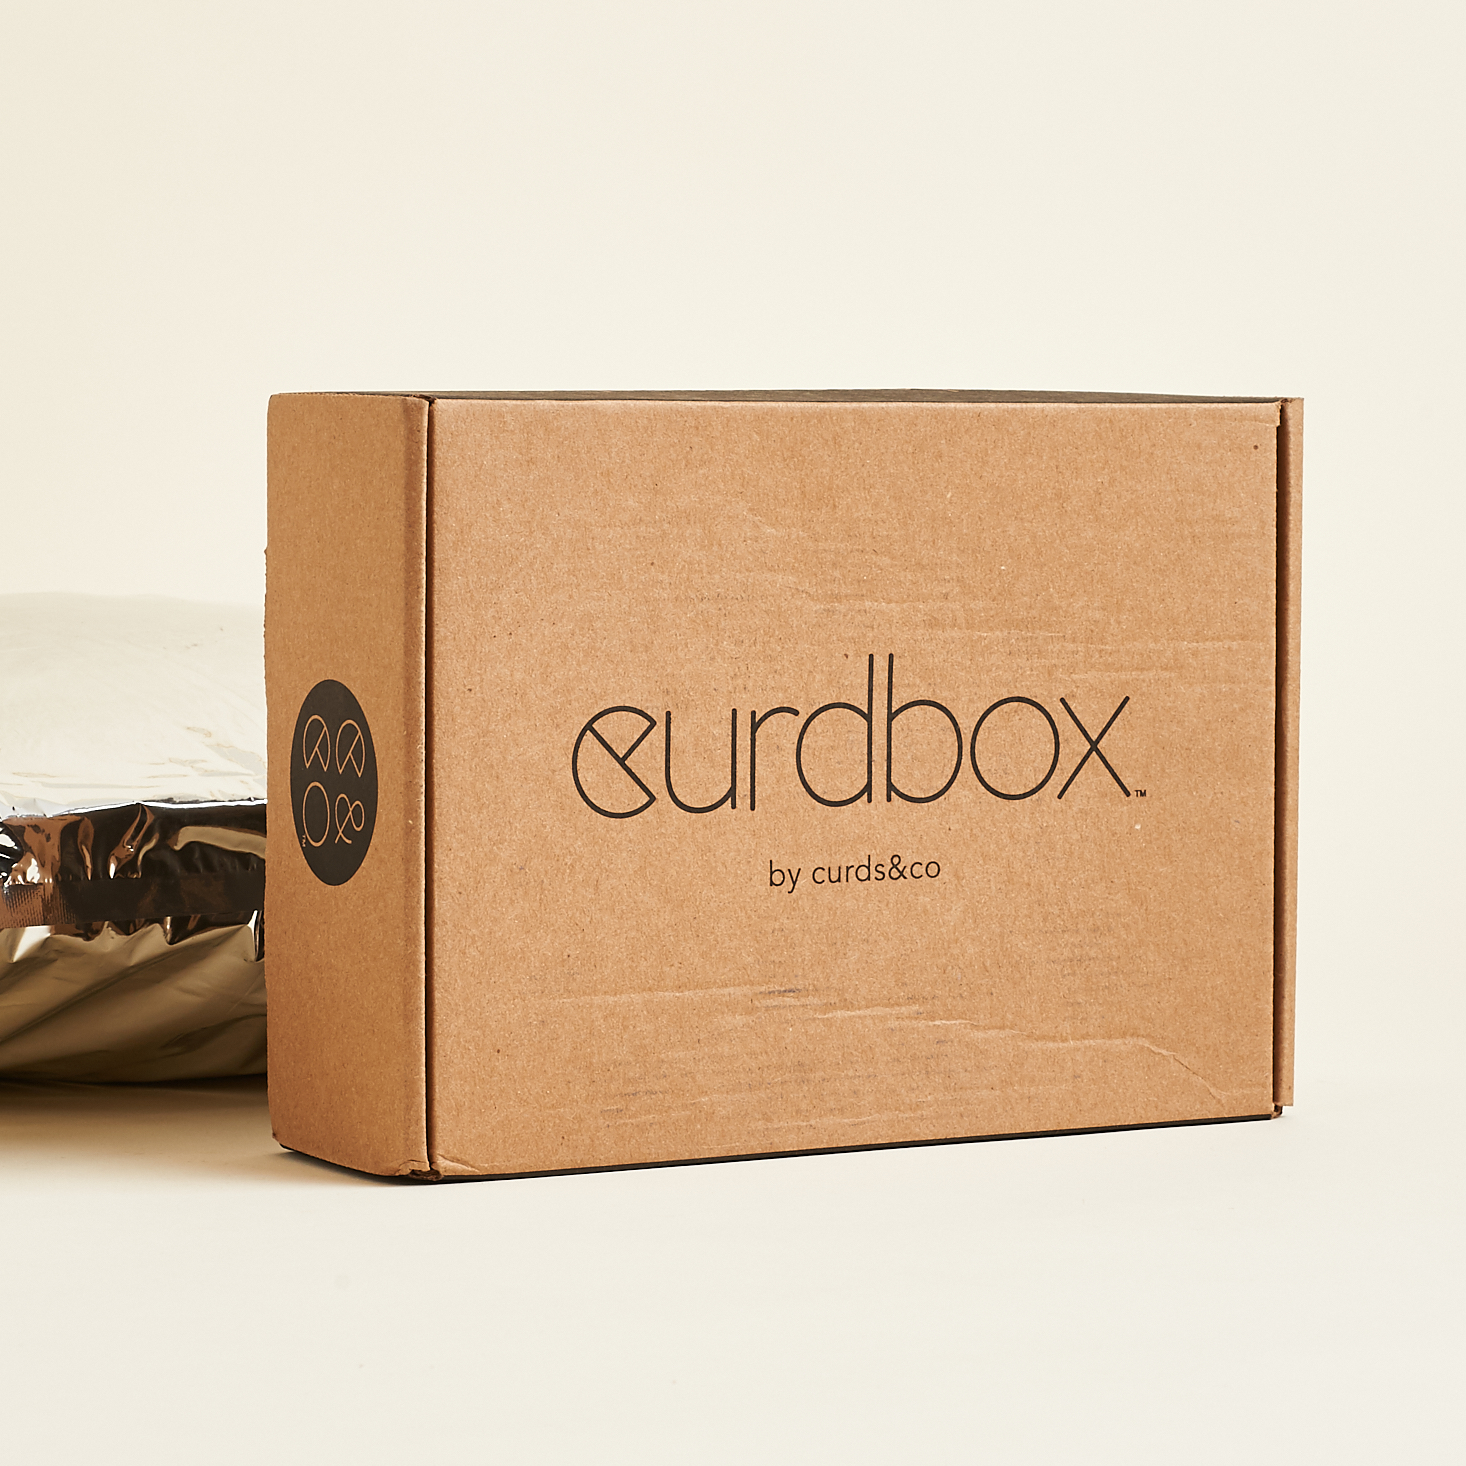 curdbox Cheese Subscription Box Review – November 2019